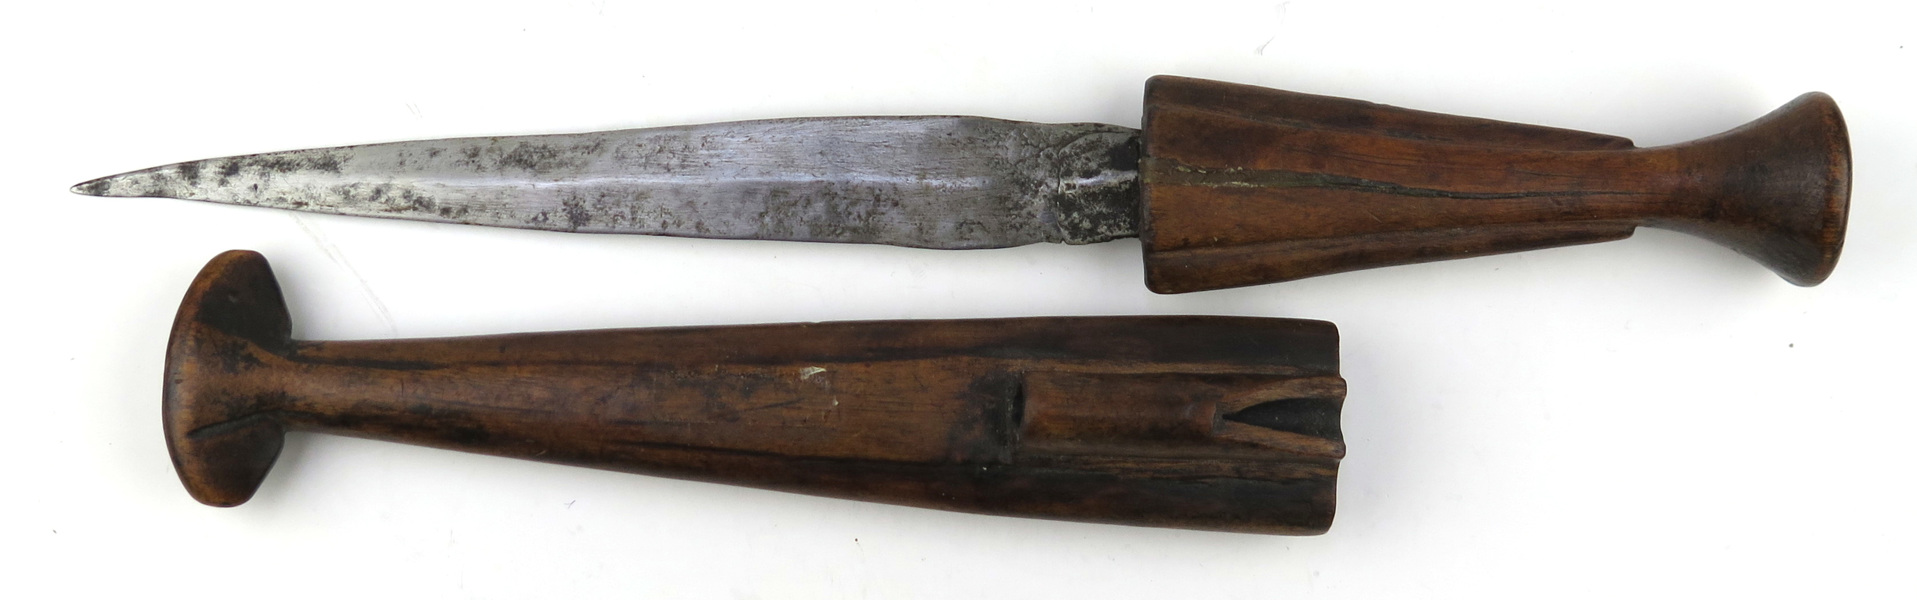 Kniv i balja, hardwood och smide, antagligen Shona, Zimbabwe, 1900-talets 1 hälft, _13033a_8d97cf5ec1a631c_lg.jpeg